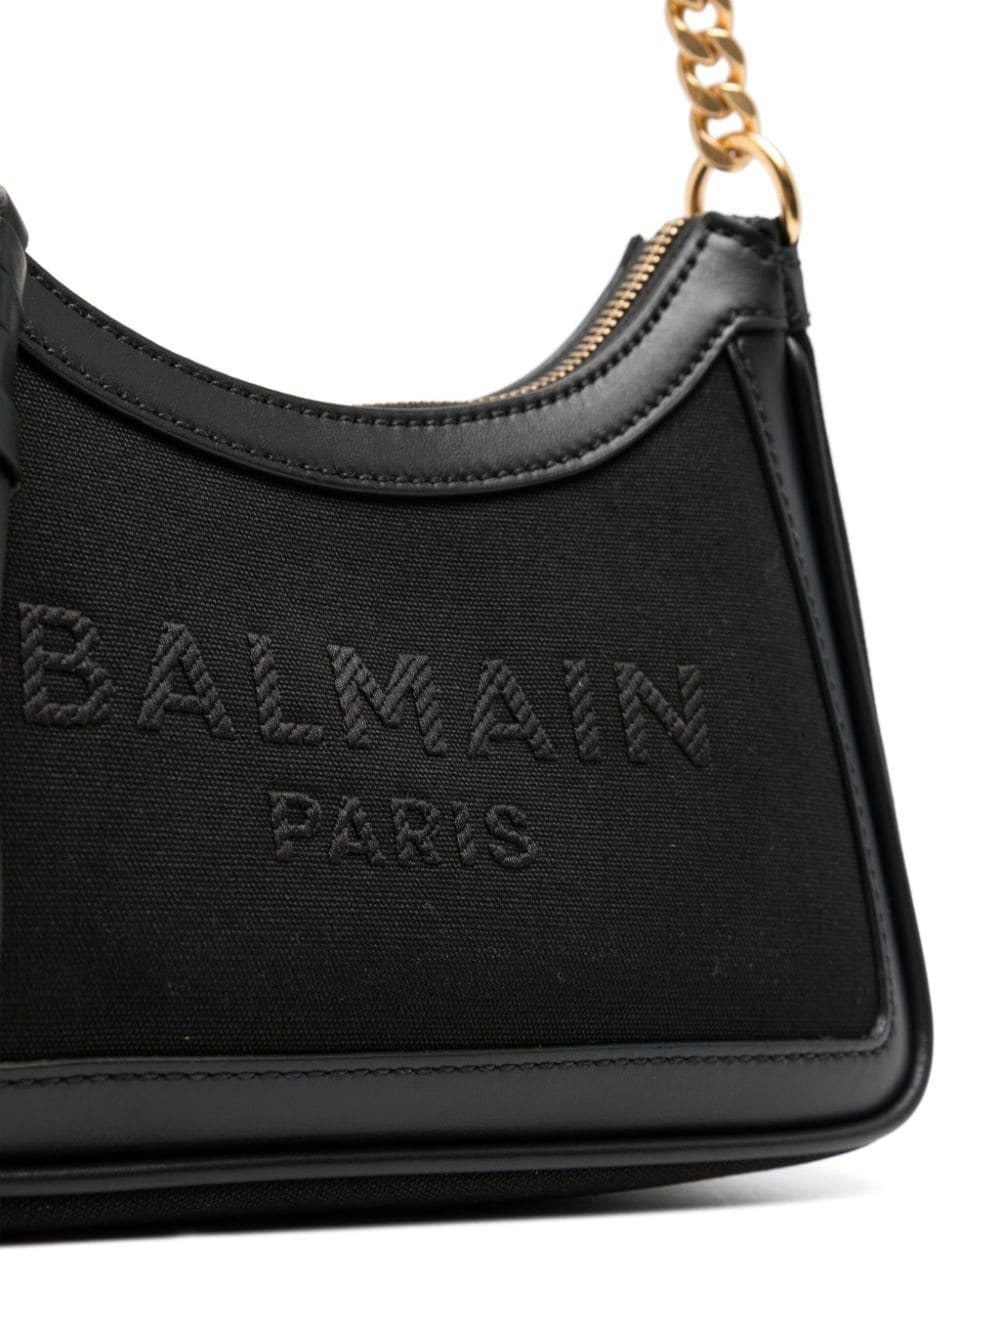 Balmain B-Army Black Canvas & Leather Shoulder Bag